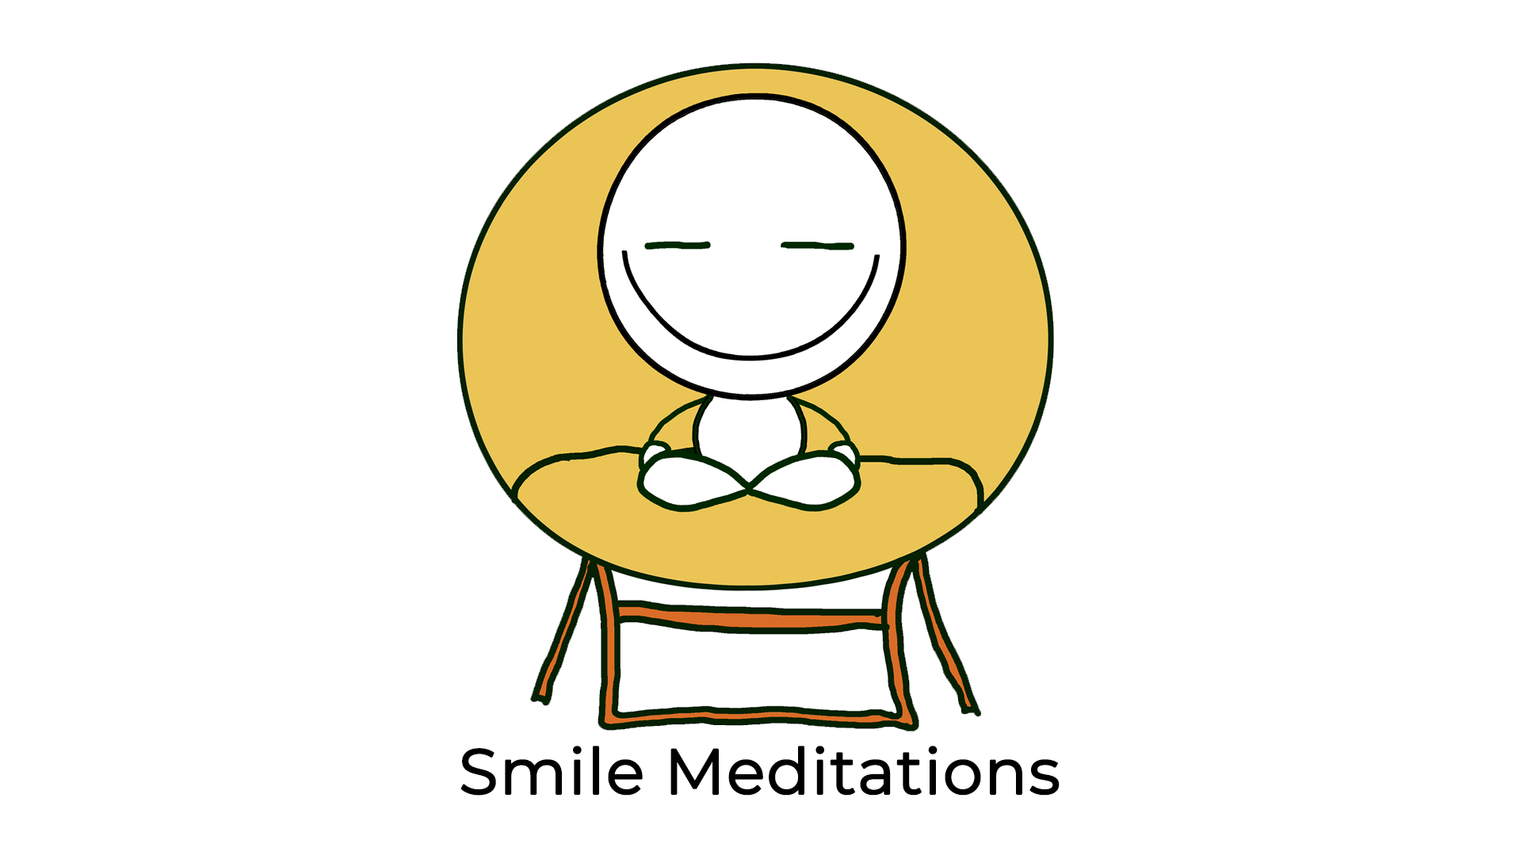 Smile Meditations